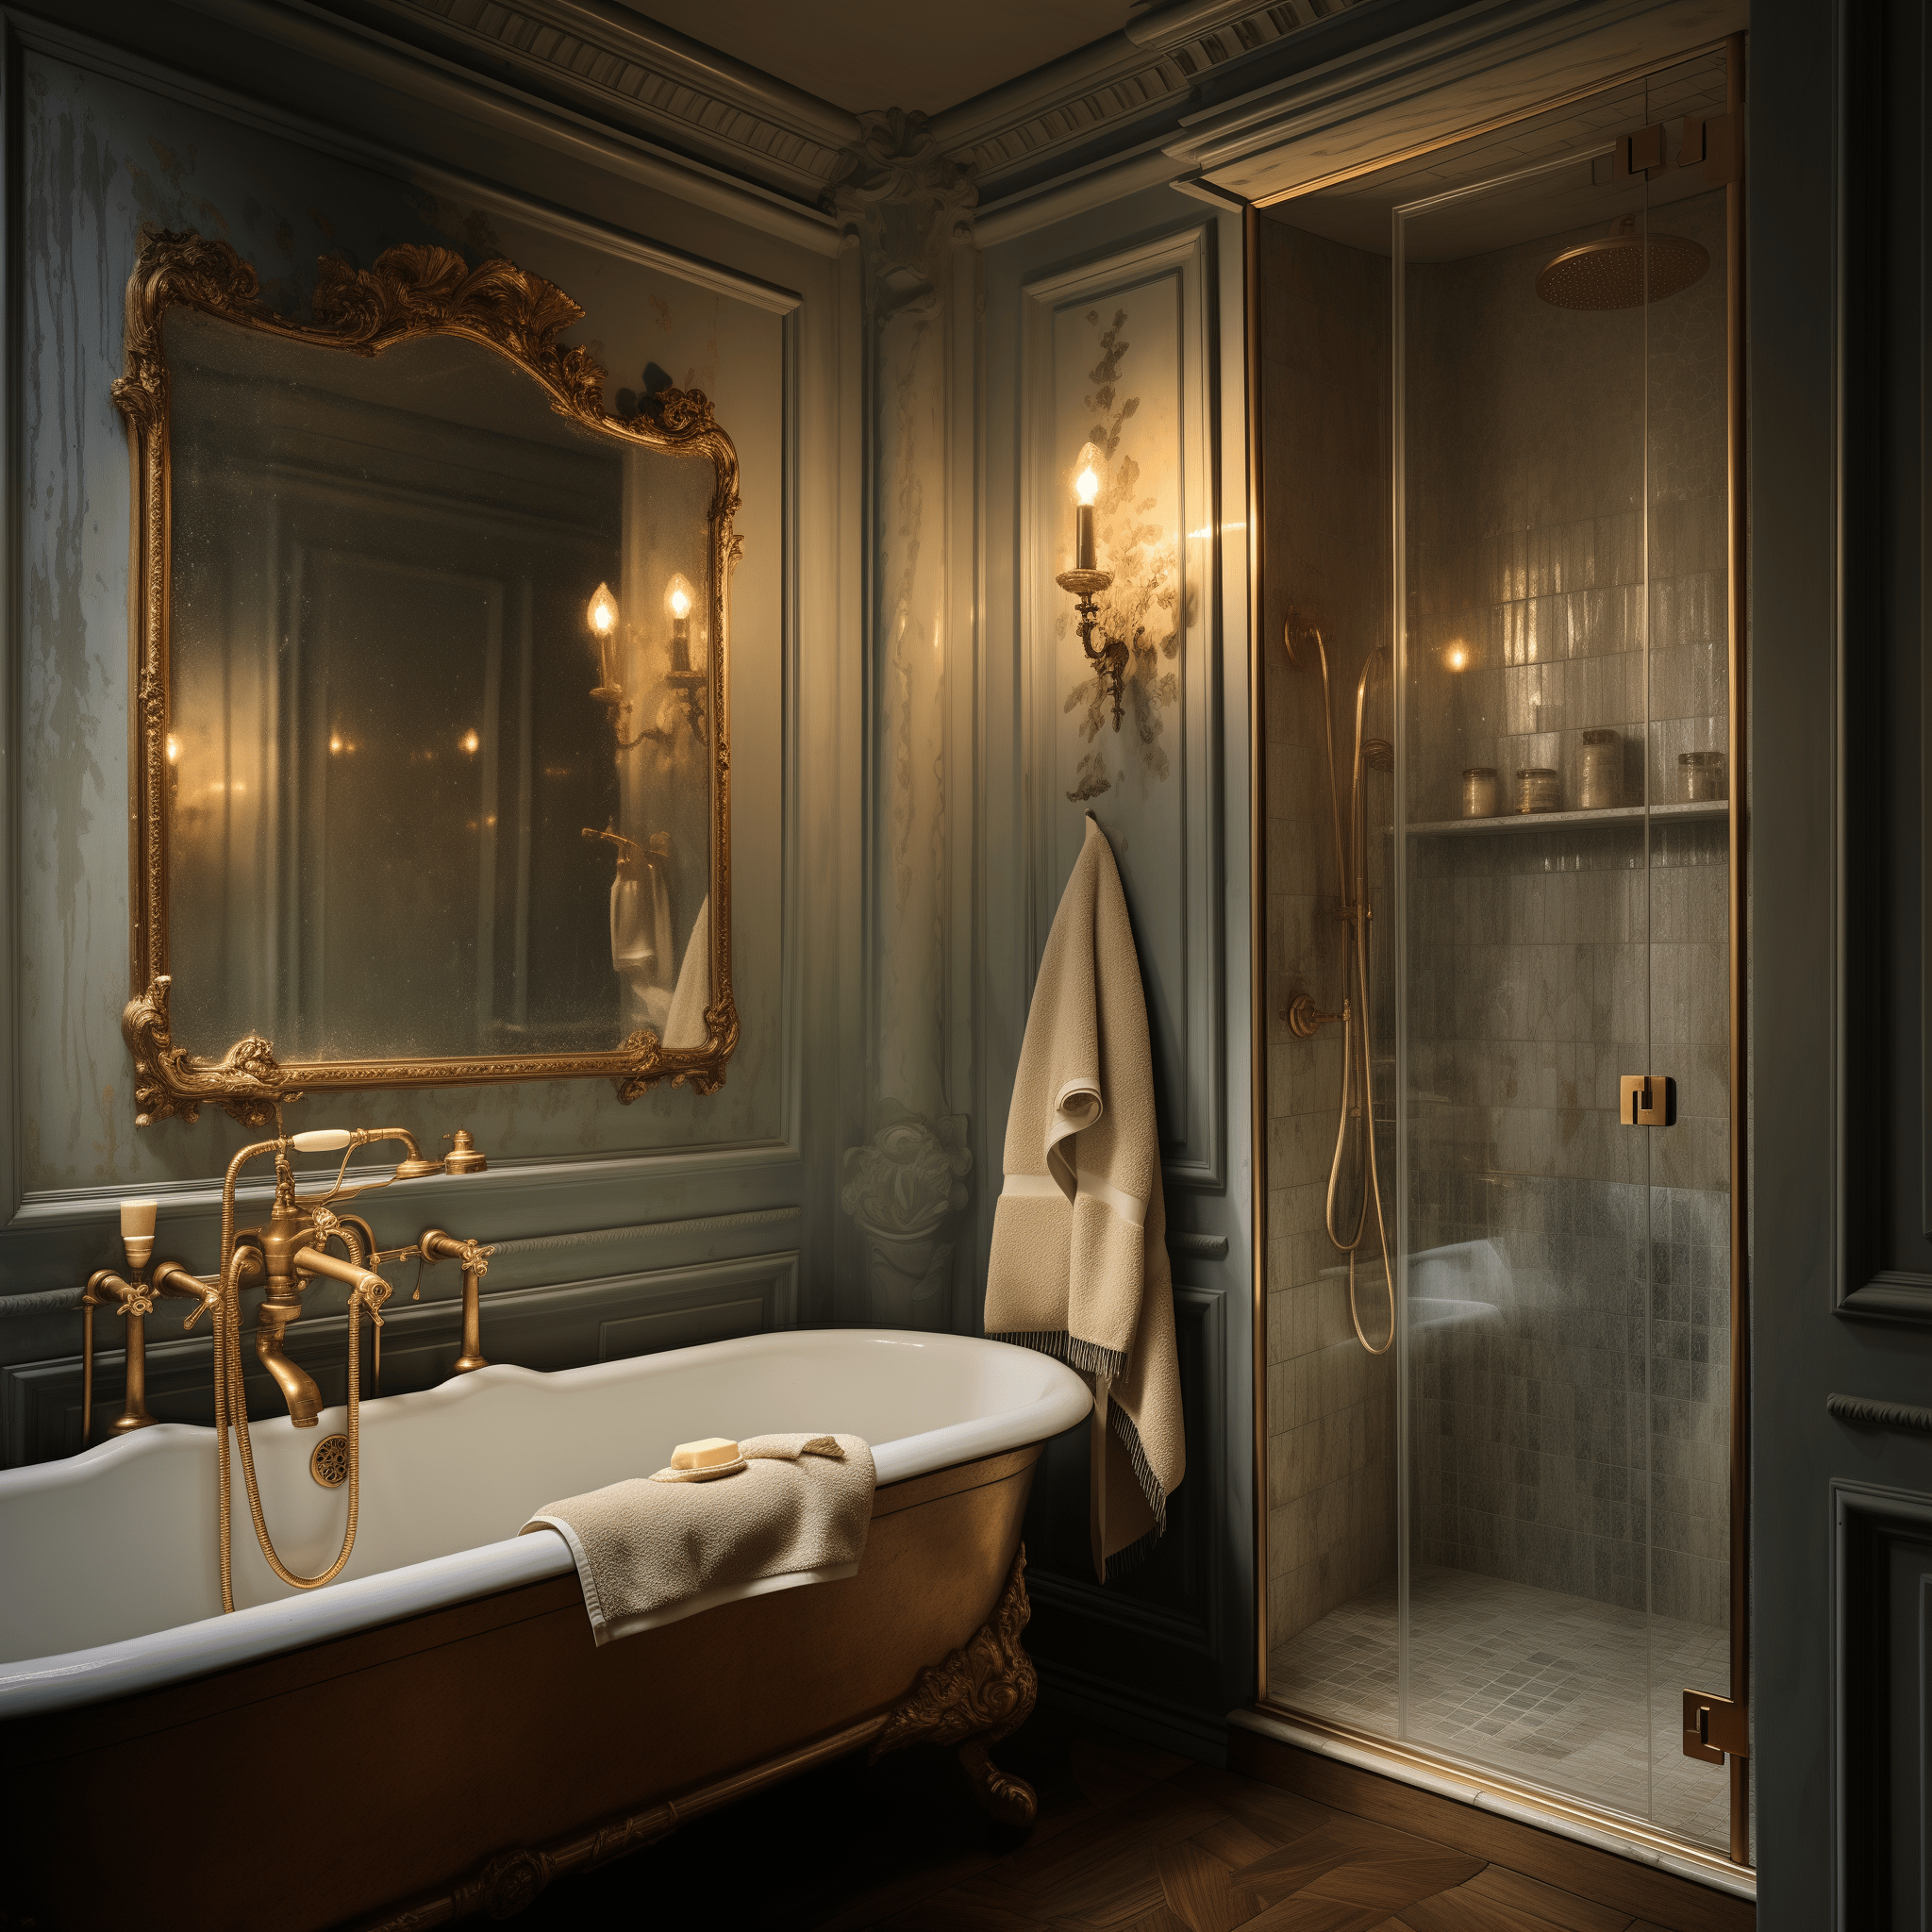 french bathroom decor ideas interior design small luxury parisian aesthetic gold green mirror shower